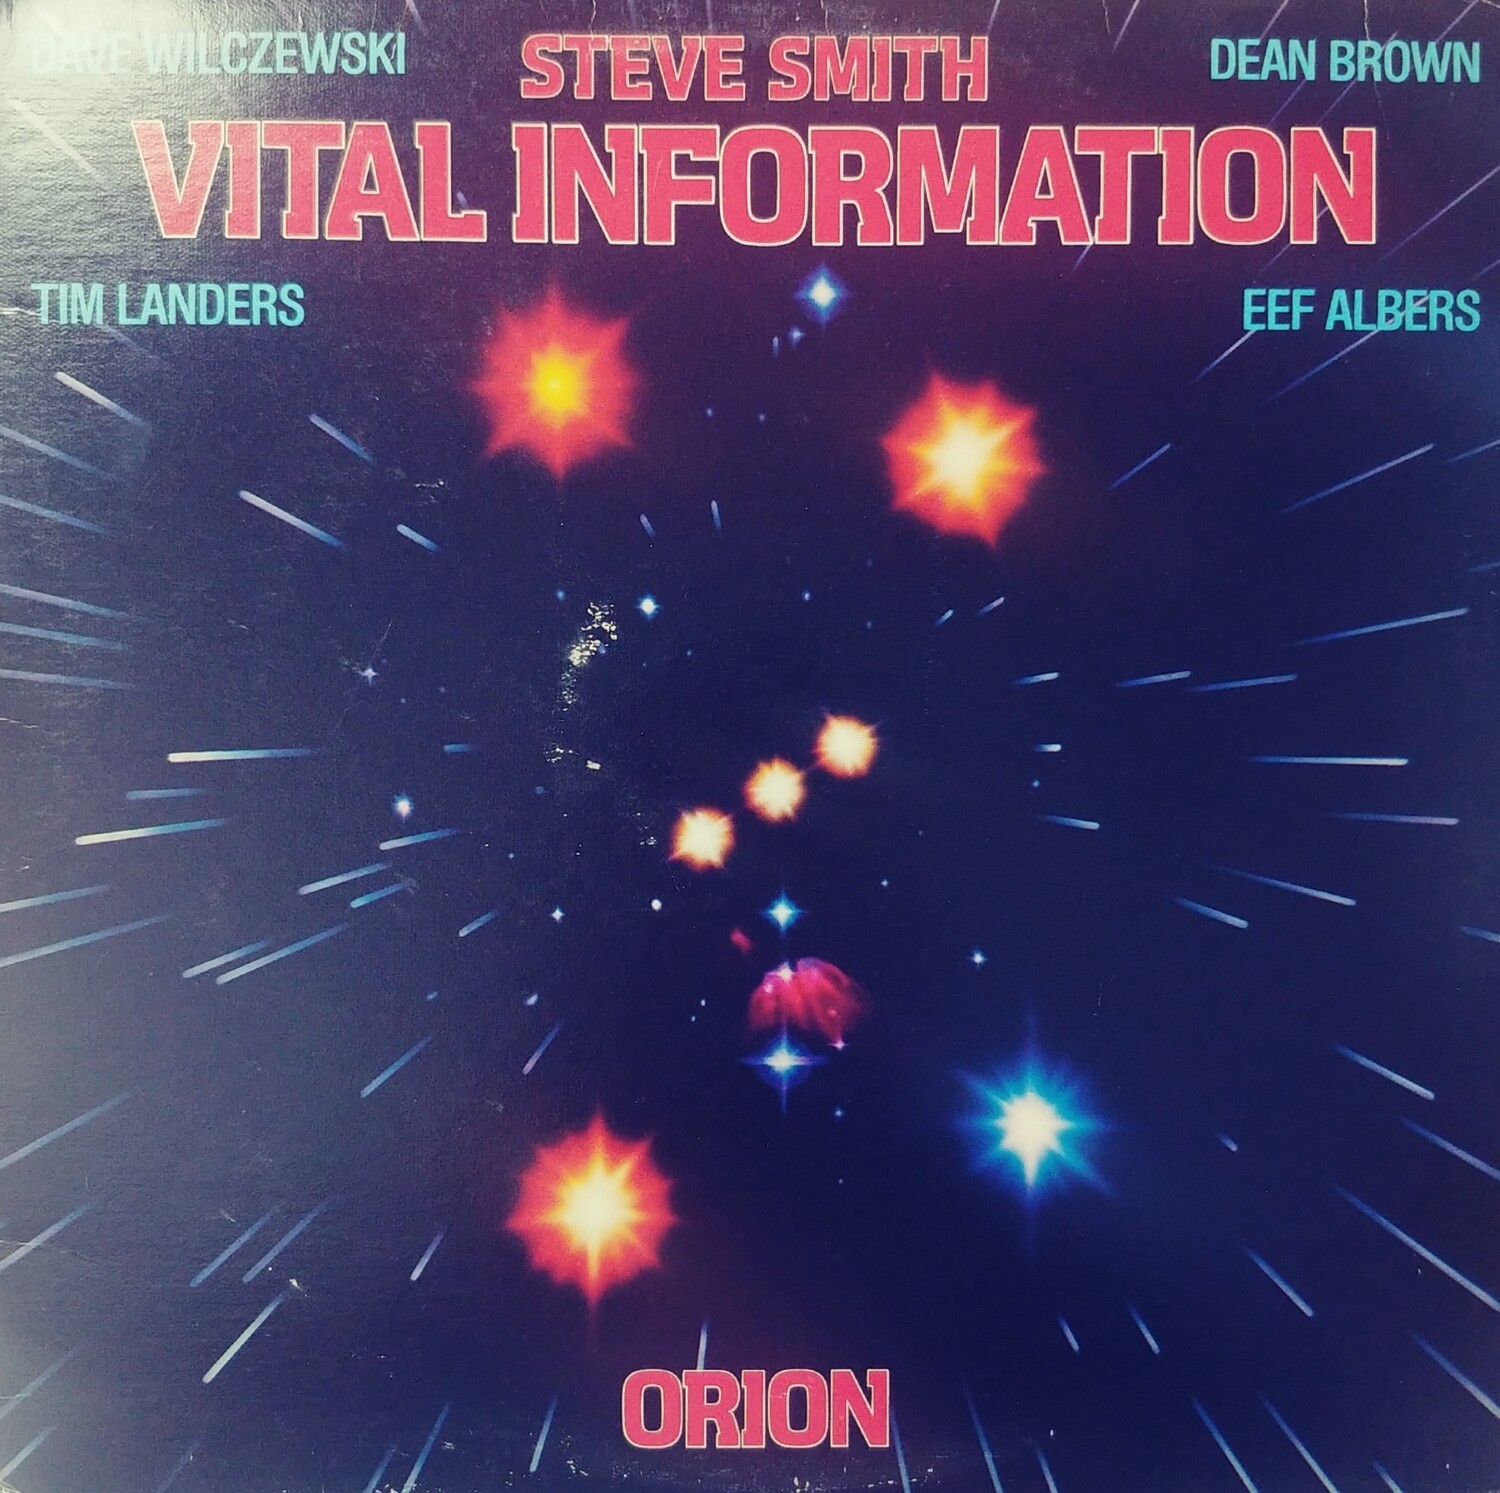 Steve Smith & Vital Information - Orion